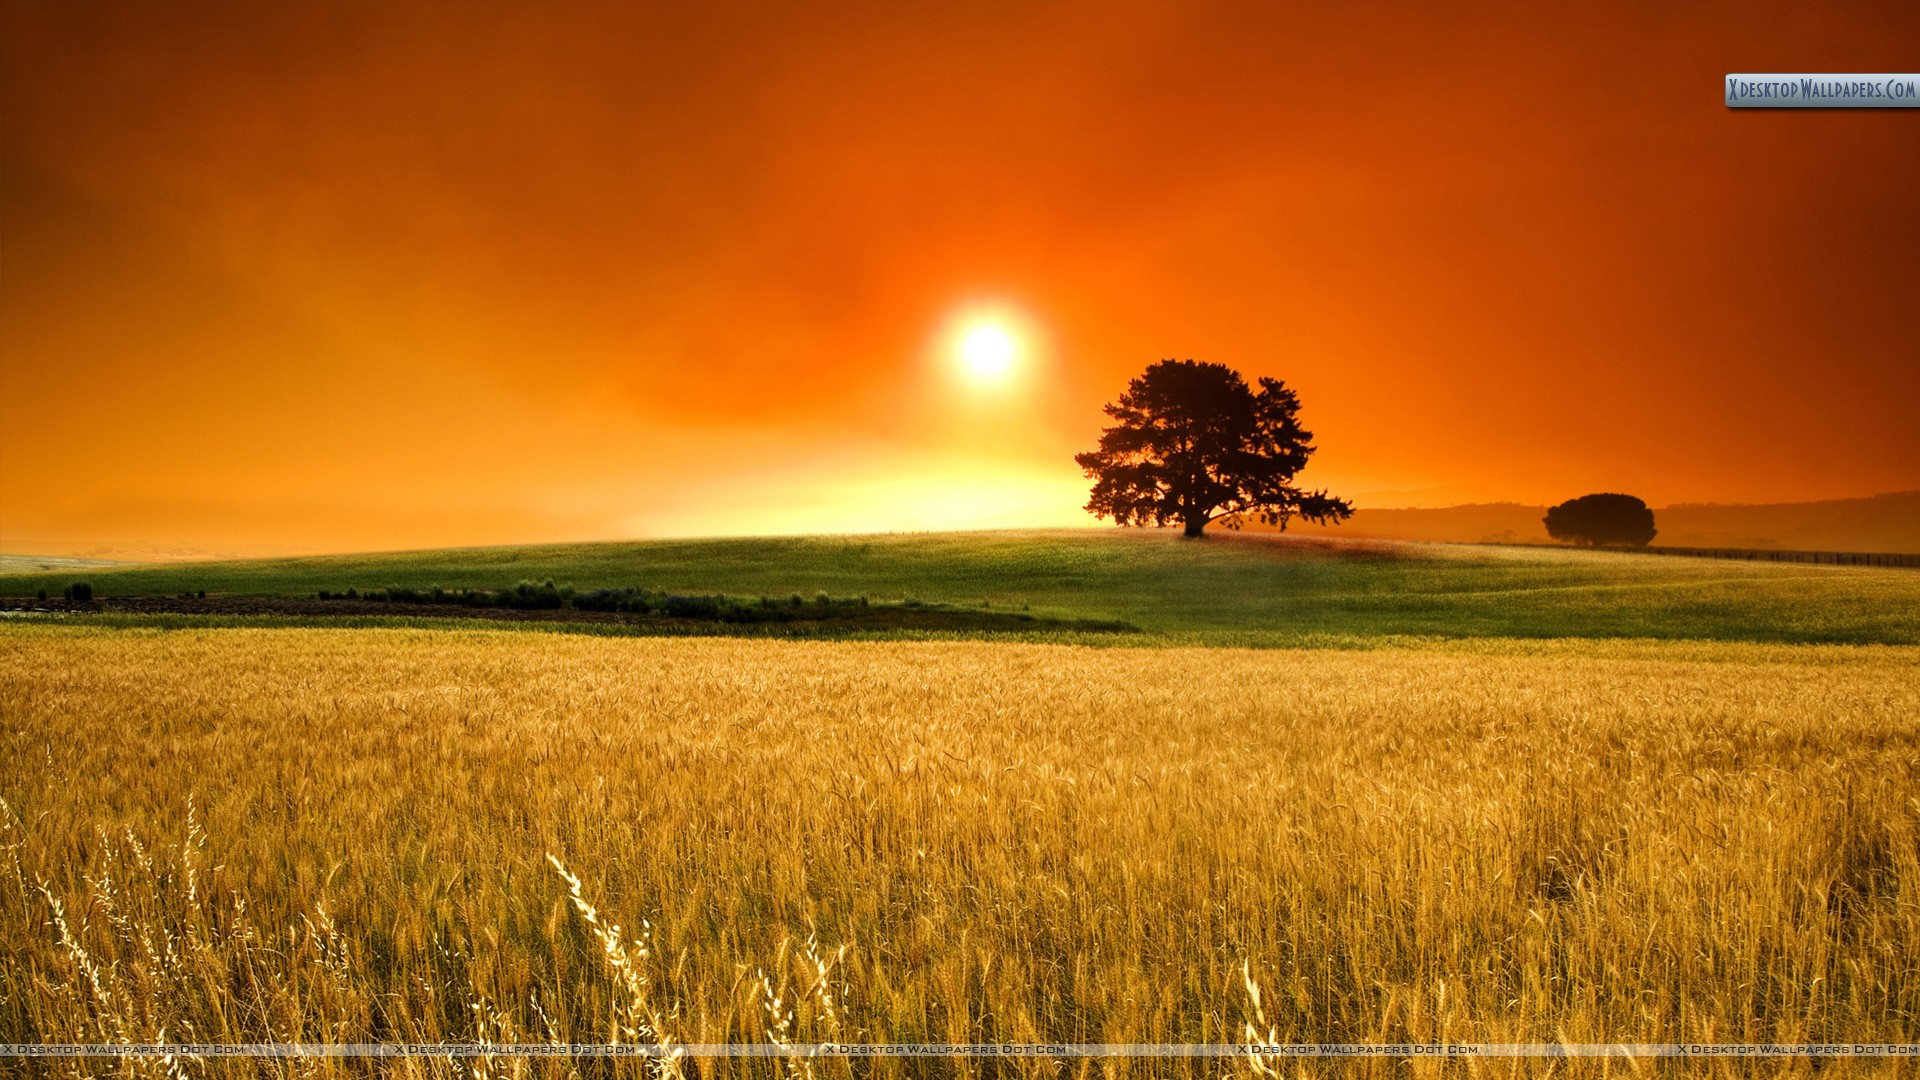 Sunrise Wallpaper, Photo & Image in HD